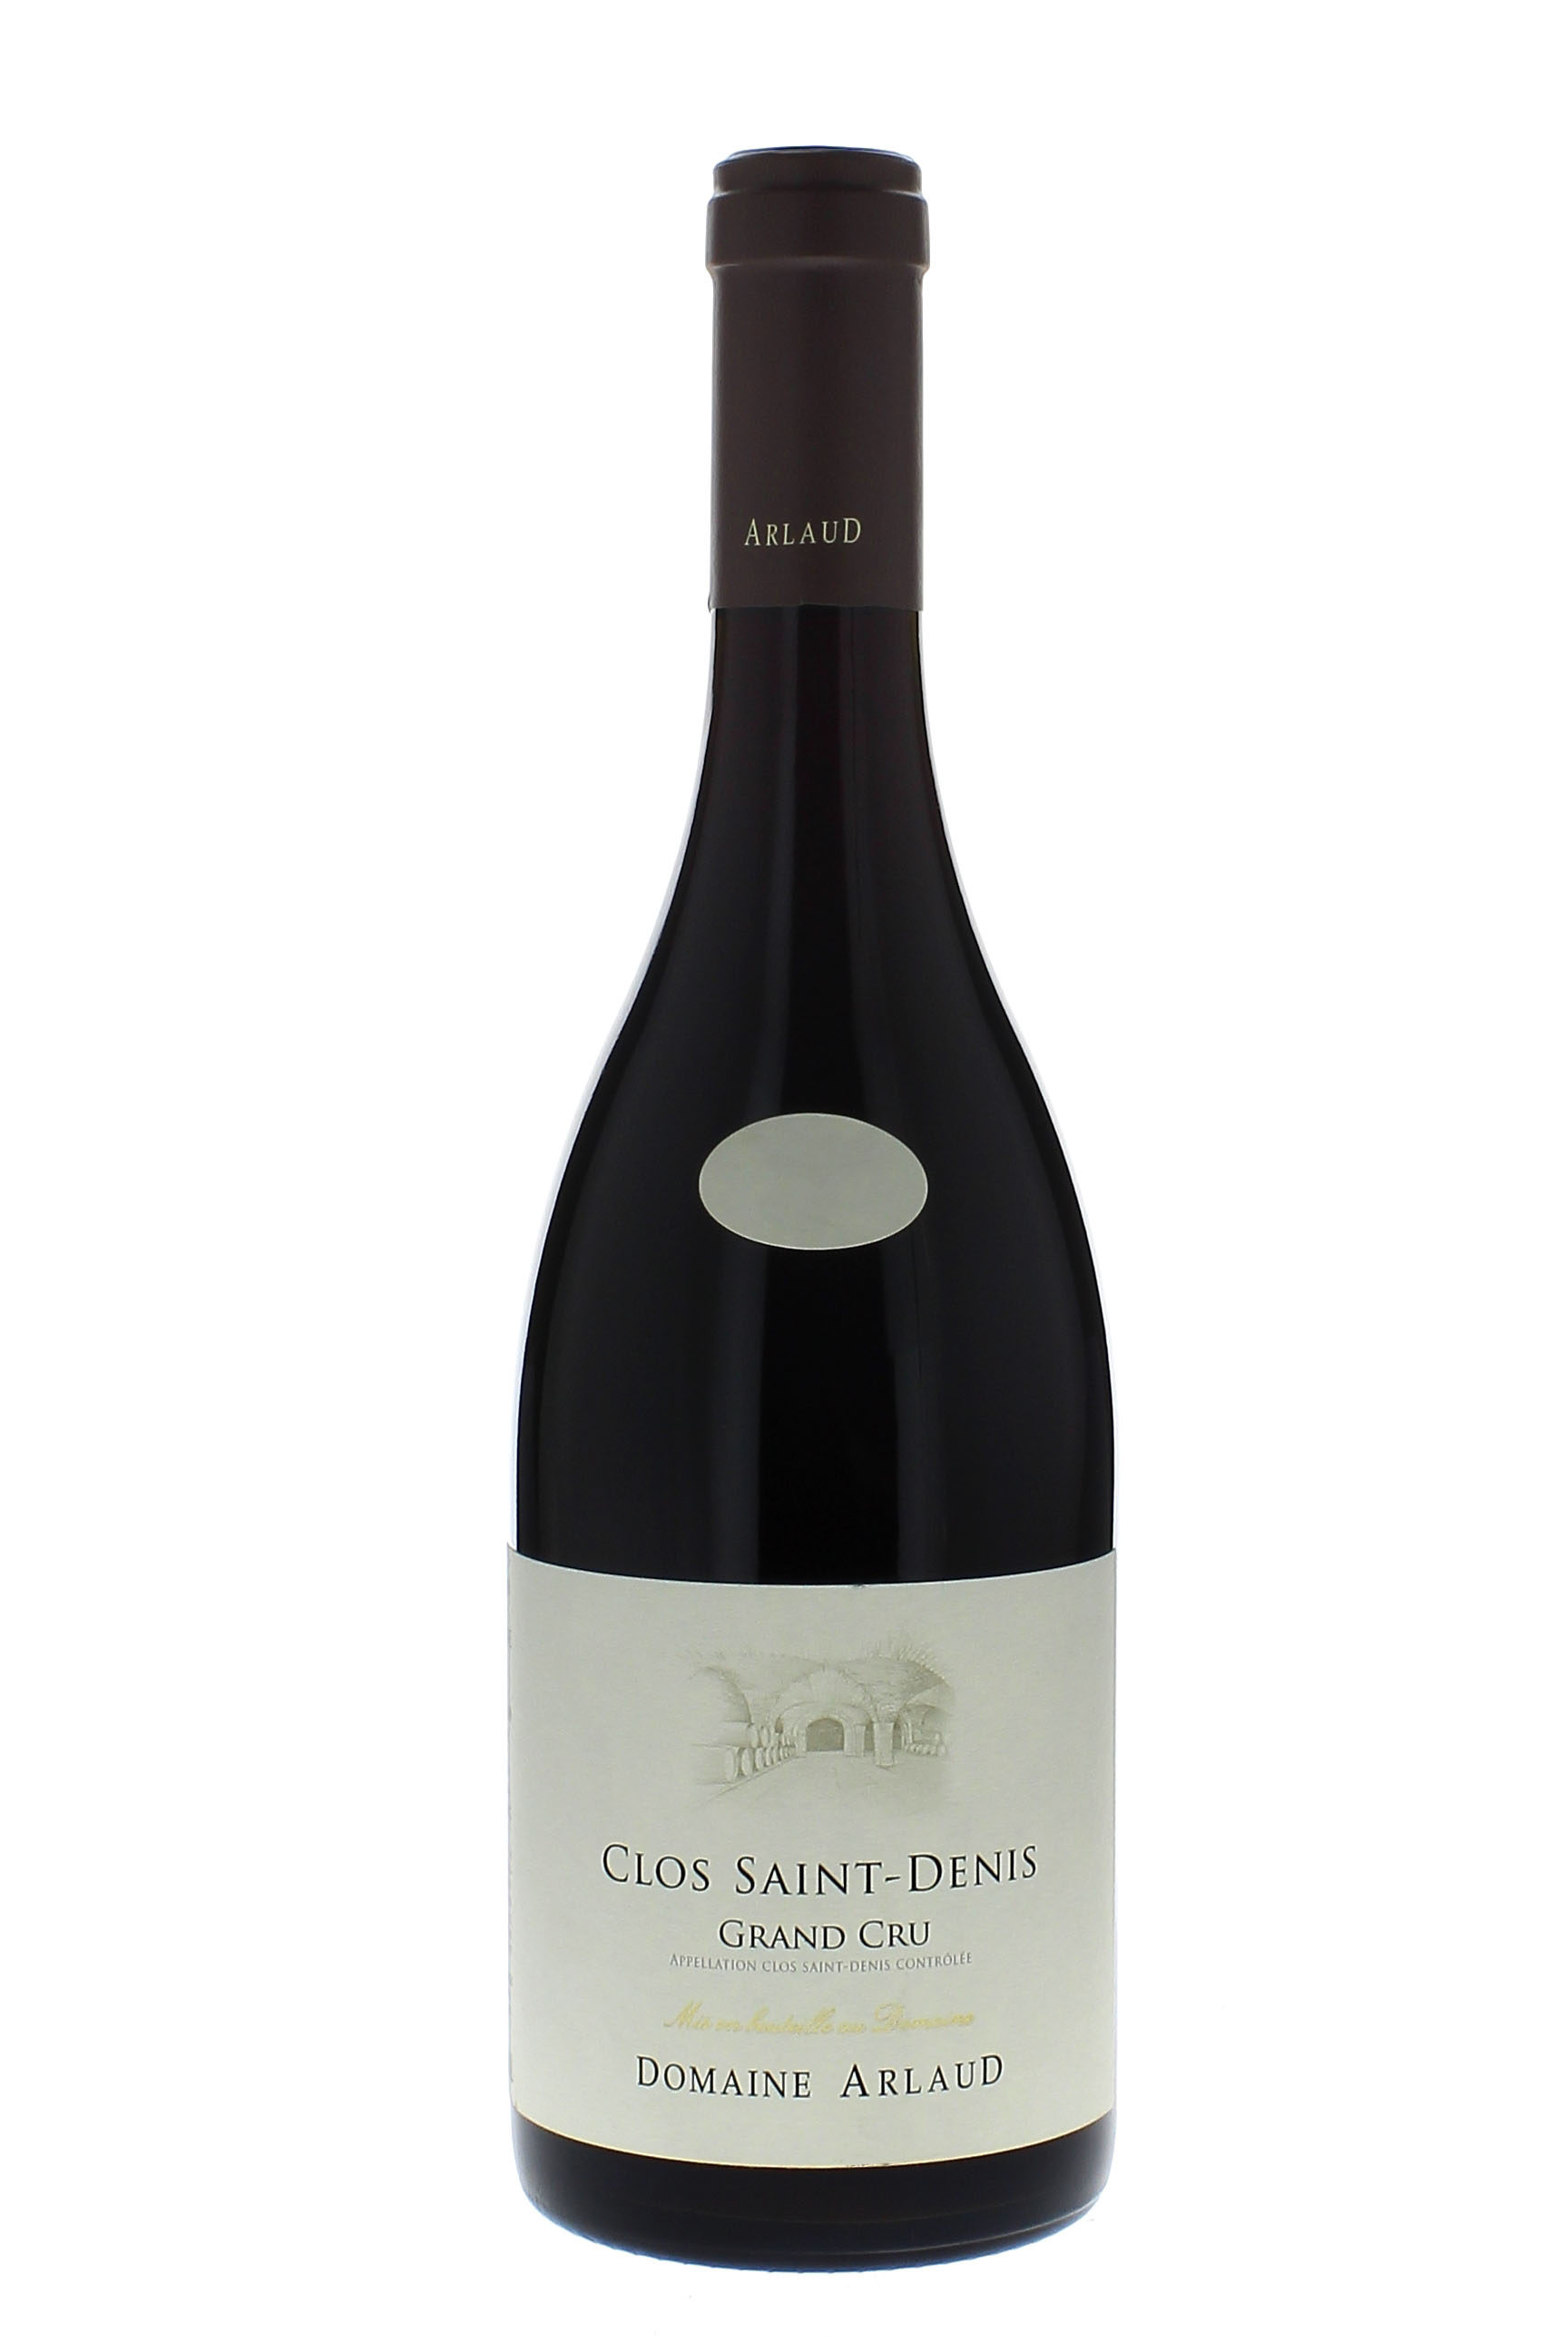 Clos saint denis grand cru 2006 Domaine ARLAUD, Bourgogne rouge